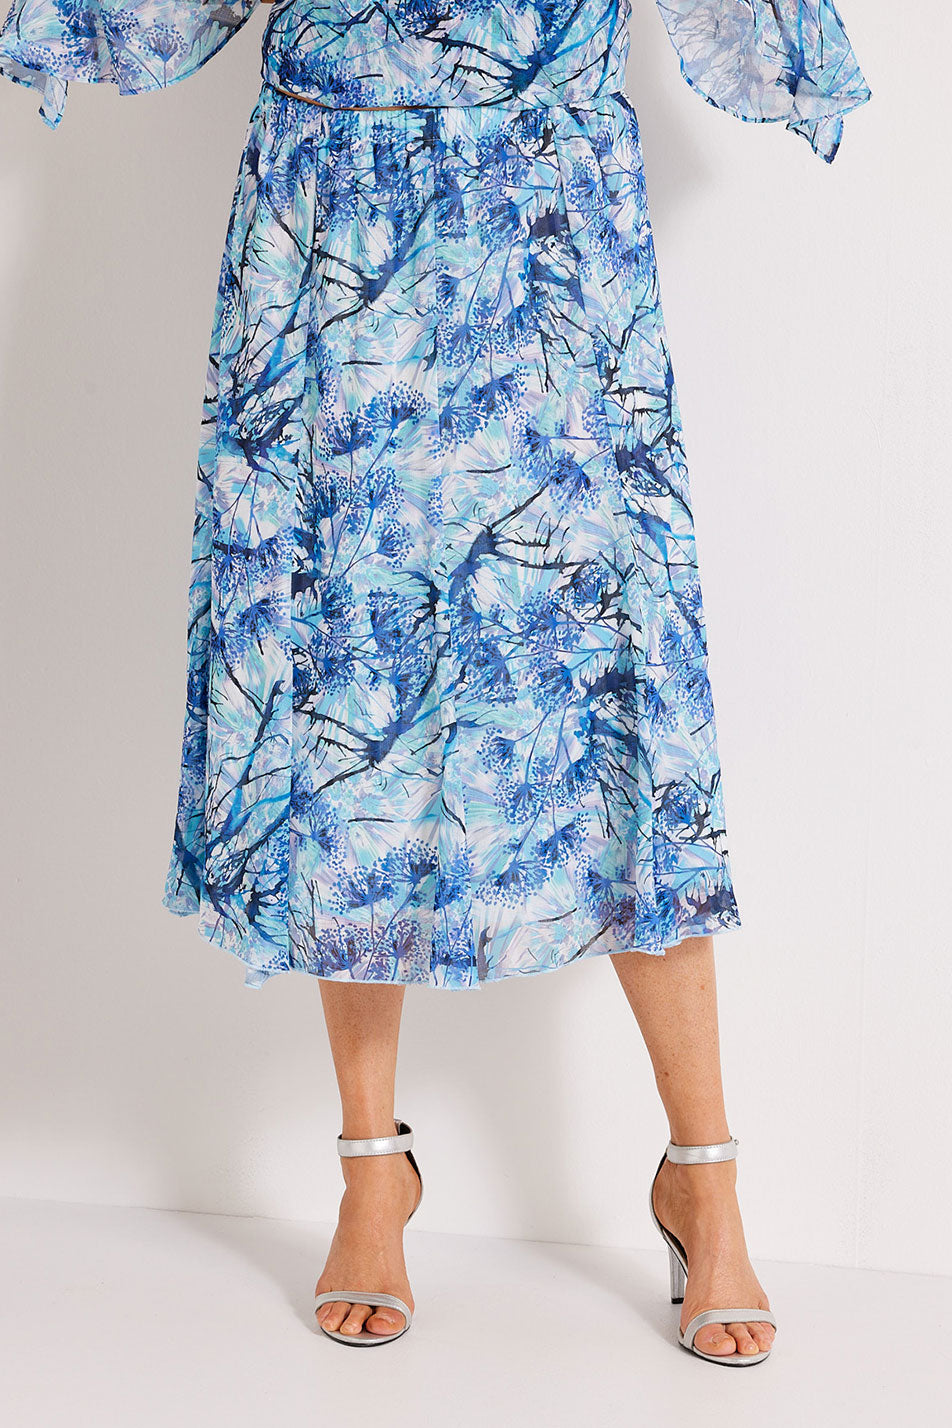 Shop Margaux Gored Skirt in Blue Mix – Fella Hamilton